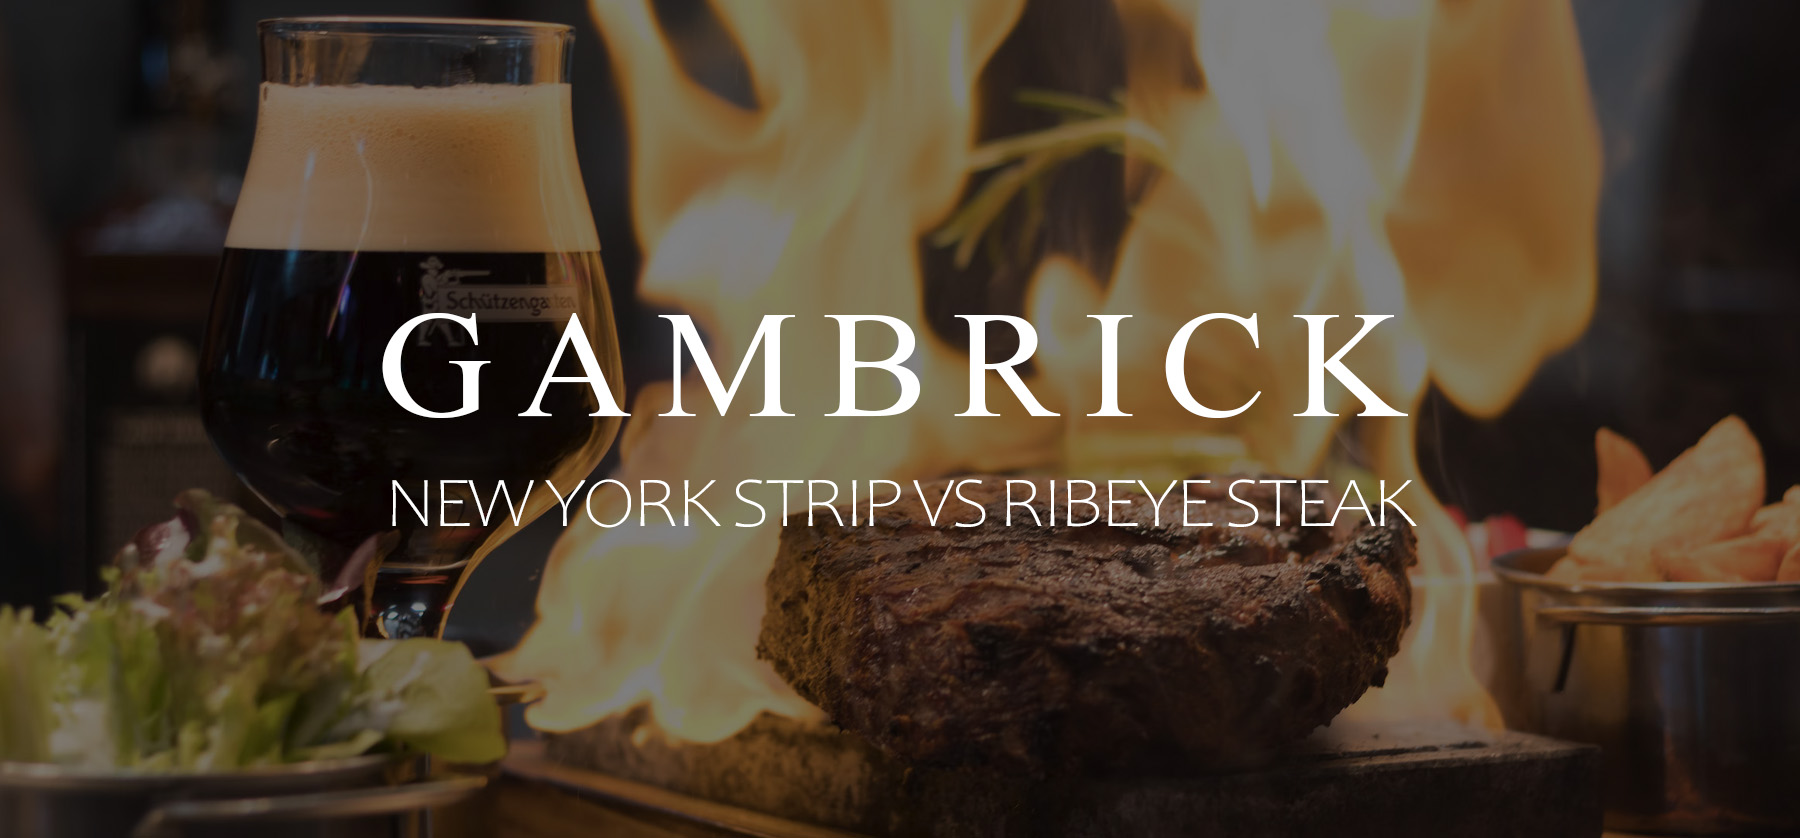 New York strip vs Ribeye steak banner 1.0